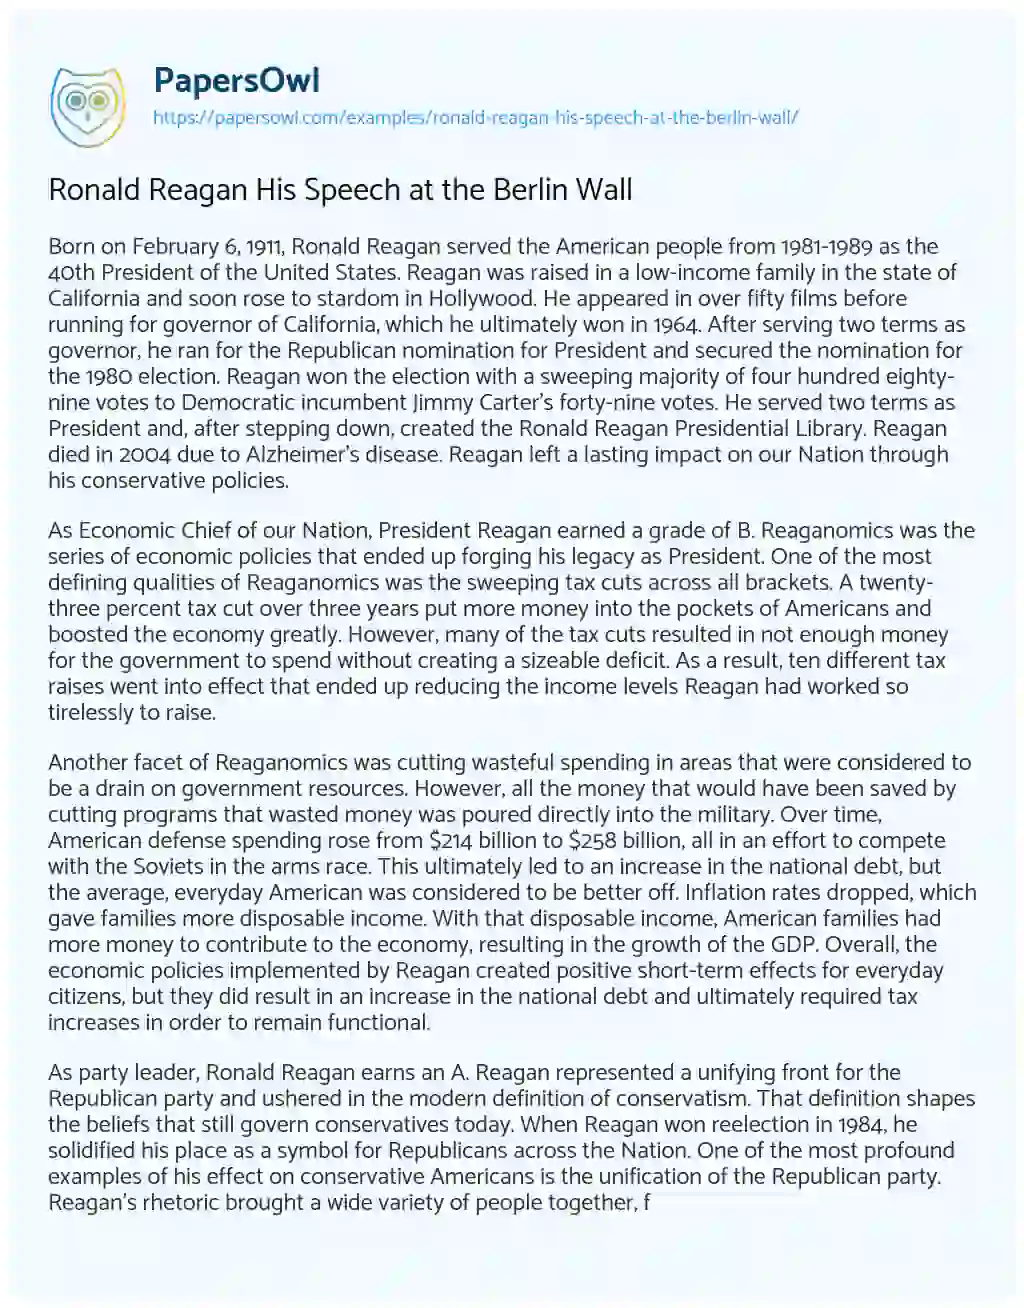 Essay on Ronald Reagan his Speech at the Berlin Wall